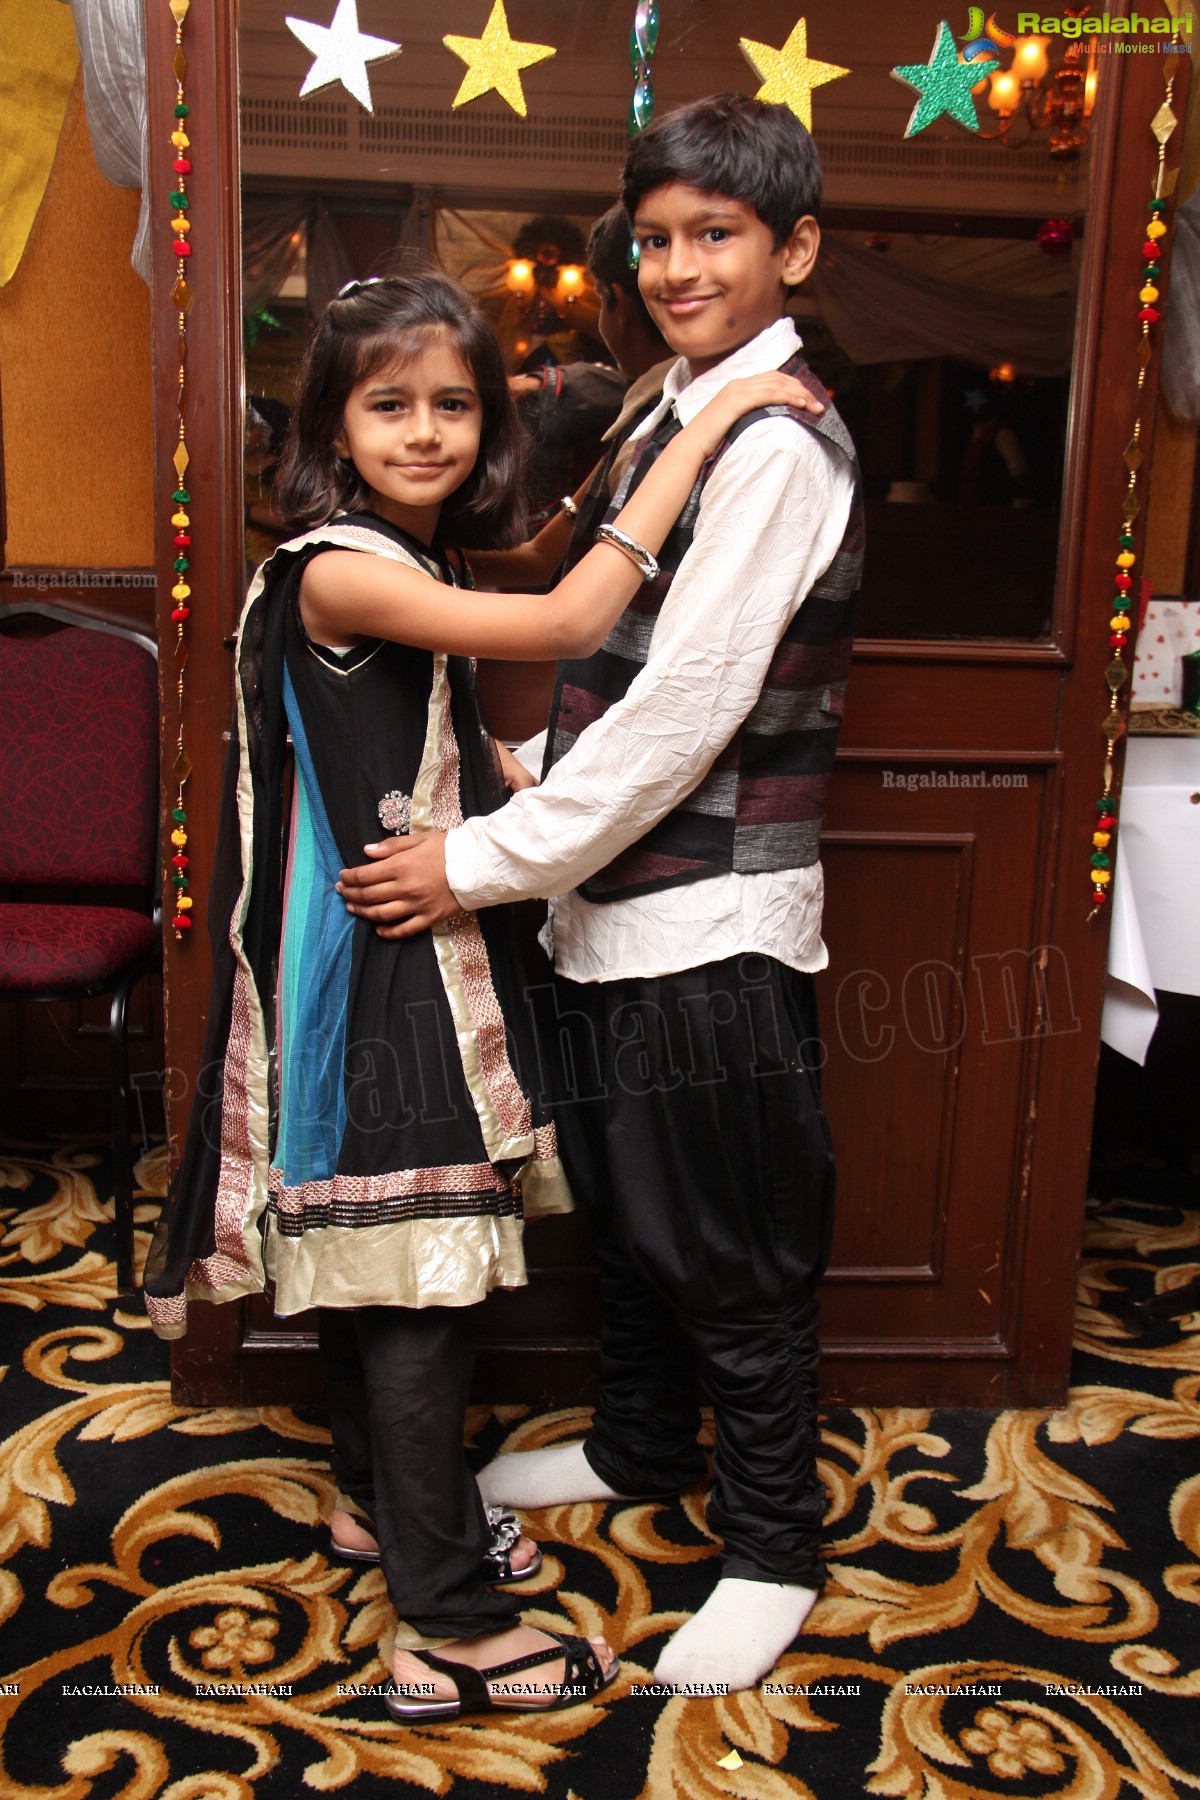 Mom Kiddos Club Diwali 2013 Celebrations at Hotel Palace Heights, Hyderabad